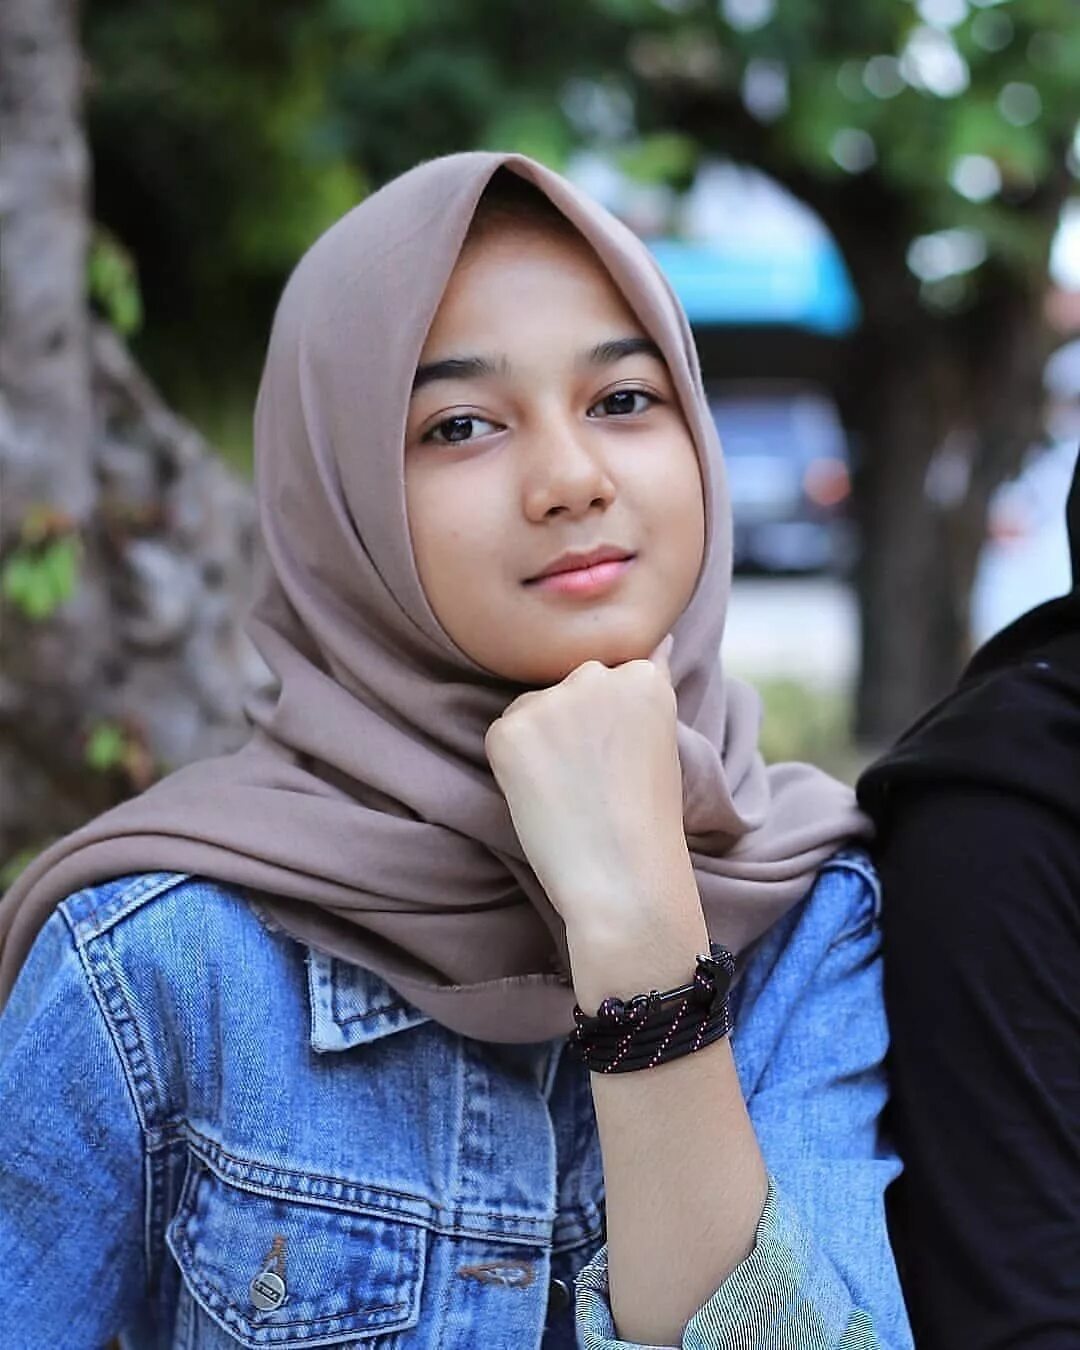 Video orang indonesia. Индонезийки в хиджабе. Индонезийские девушки в хиджабе. Казашки в хиджабе. Индонезийки девушки в хиджабах.